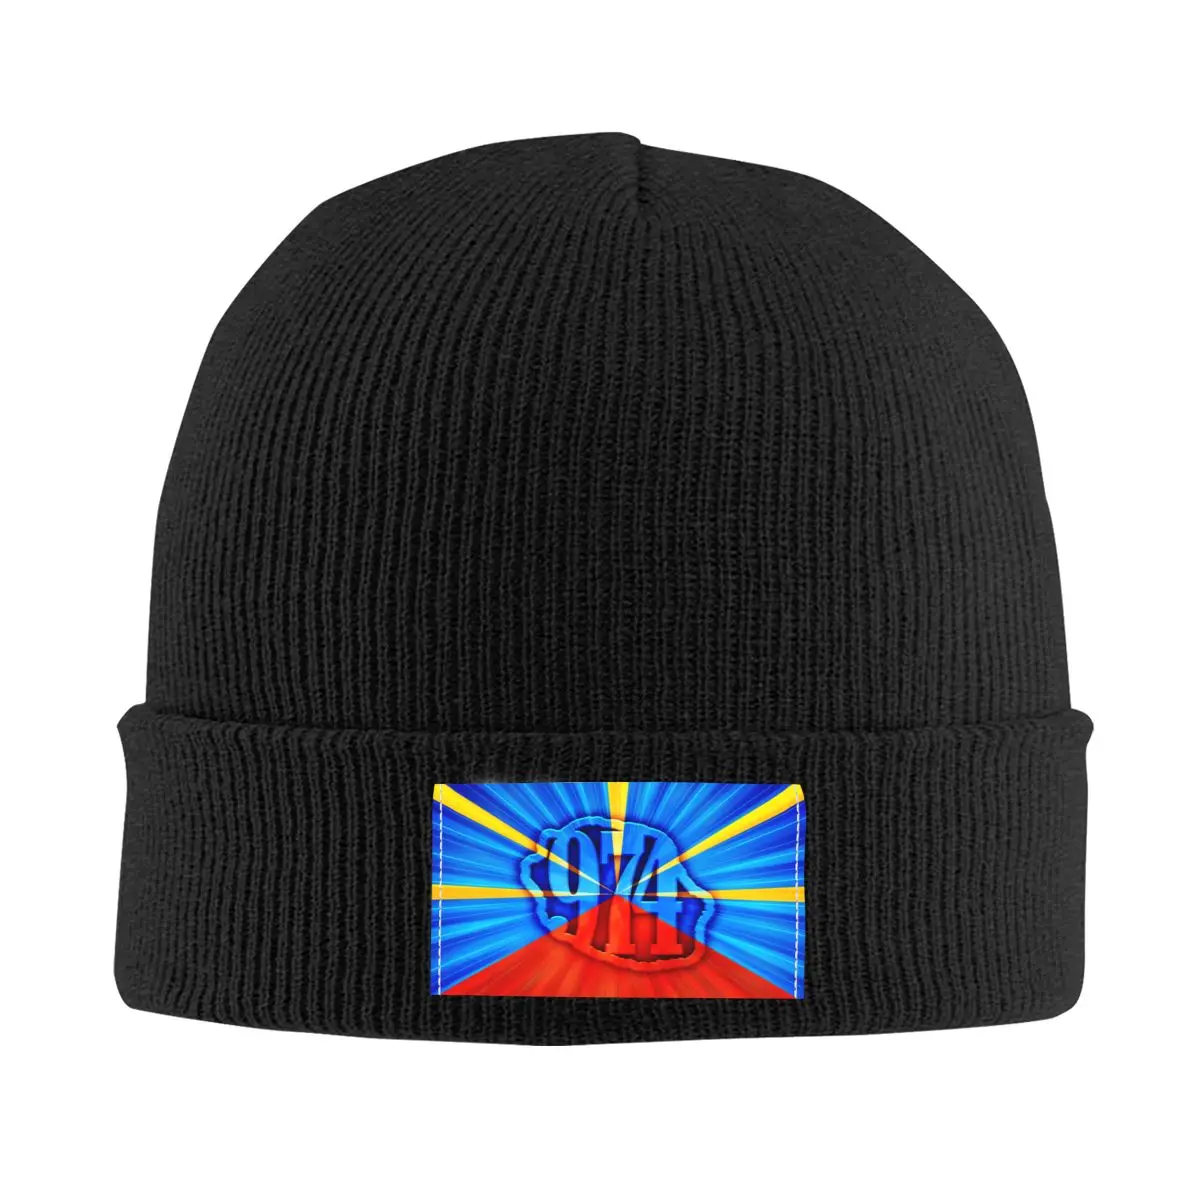 974 Maveli Reunion Island Flag Skullies Beanies Caps Hip Hop Winter Warm Knitting Hat Adult Unisex Reunionese Proud Bonnet Hats